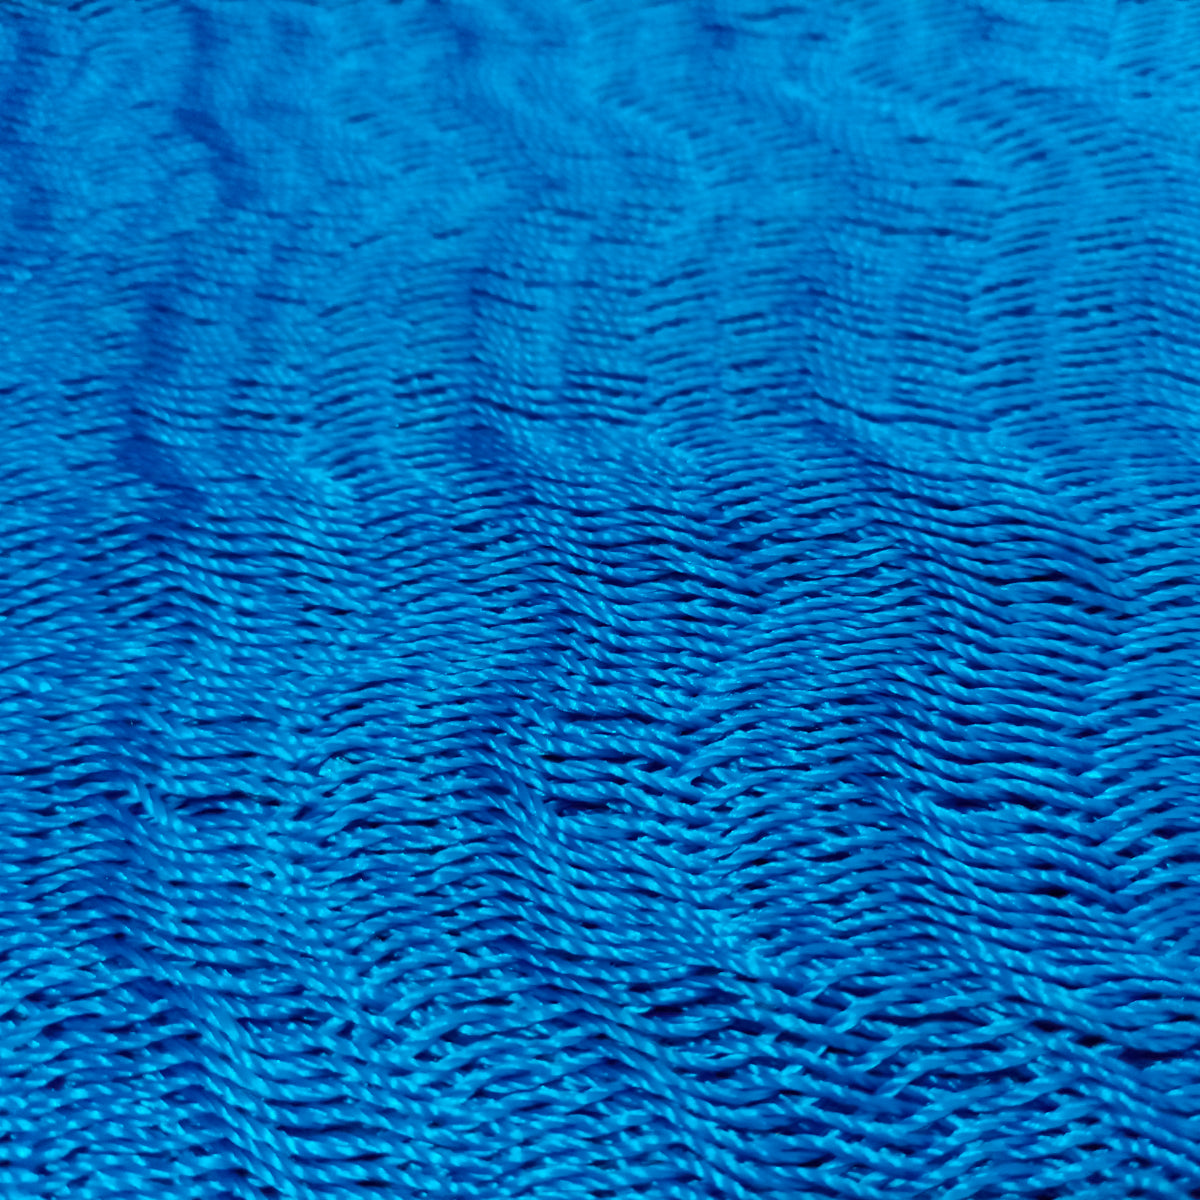 Hamaca Individual Nylon Azul